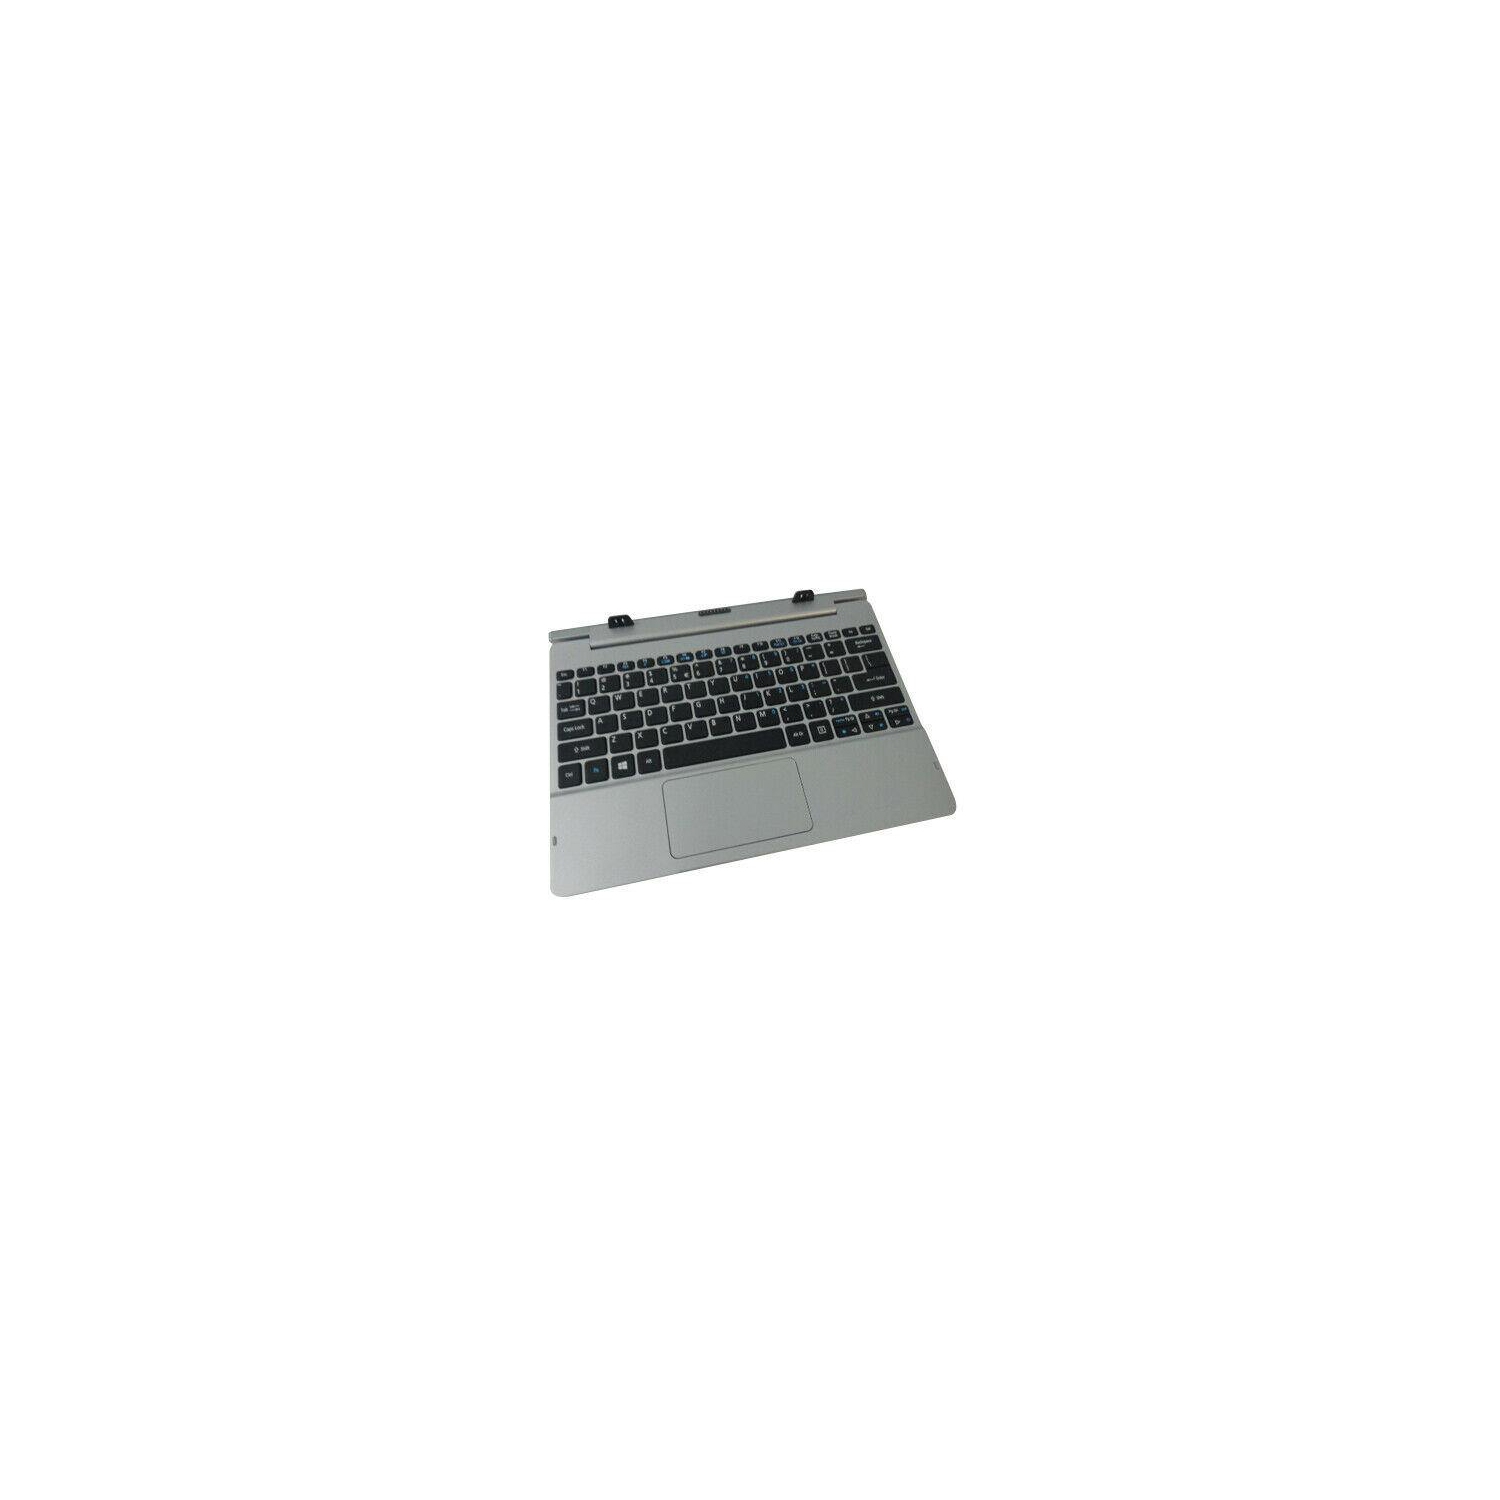 New Acer Aspire Switch 10 SW5-015 Tablet Docking Station Keyboard Dock SW5-011-DOCK